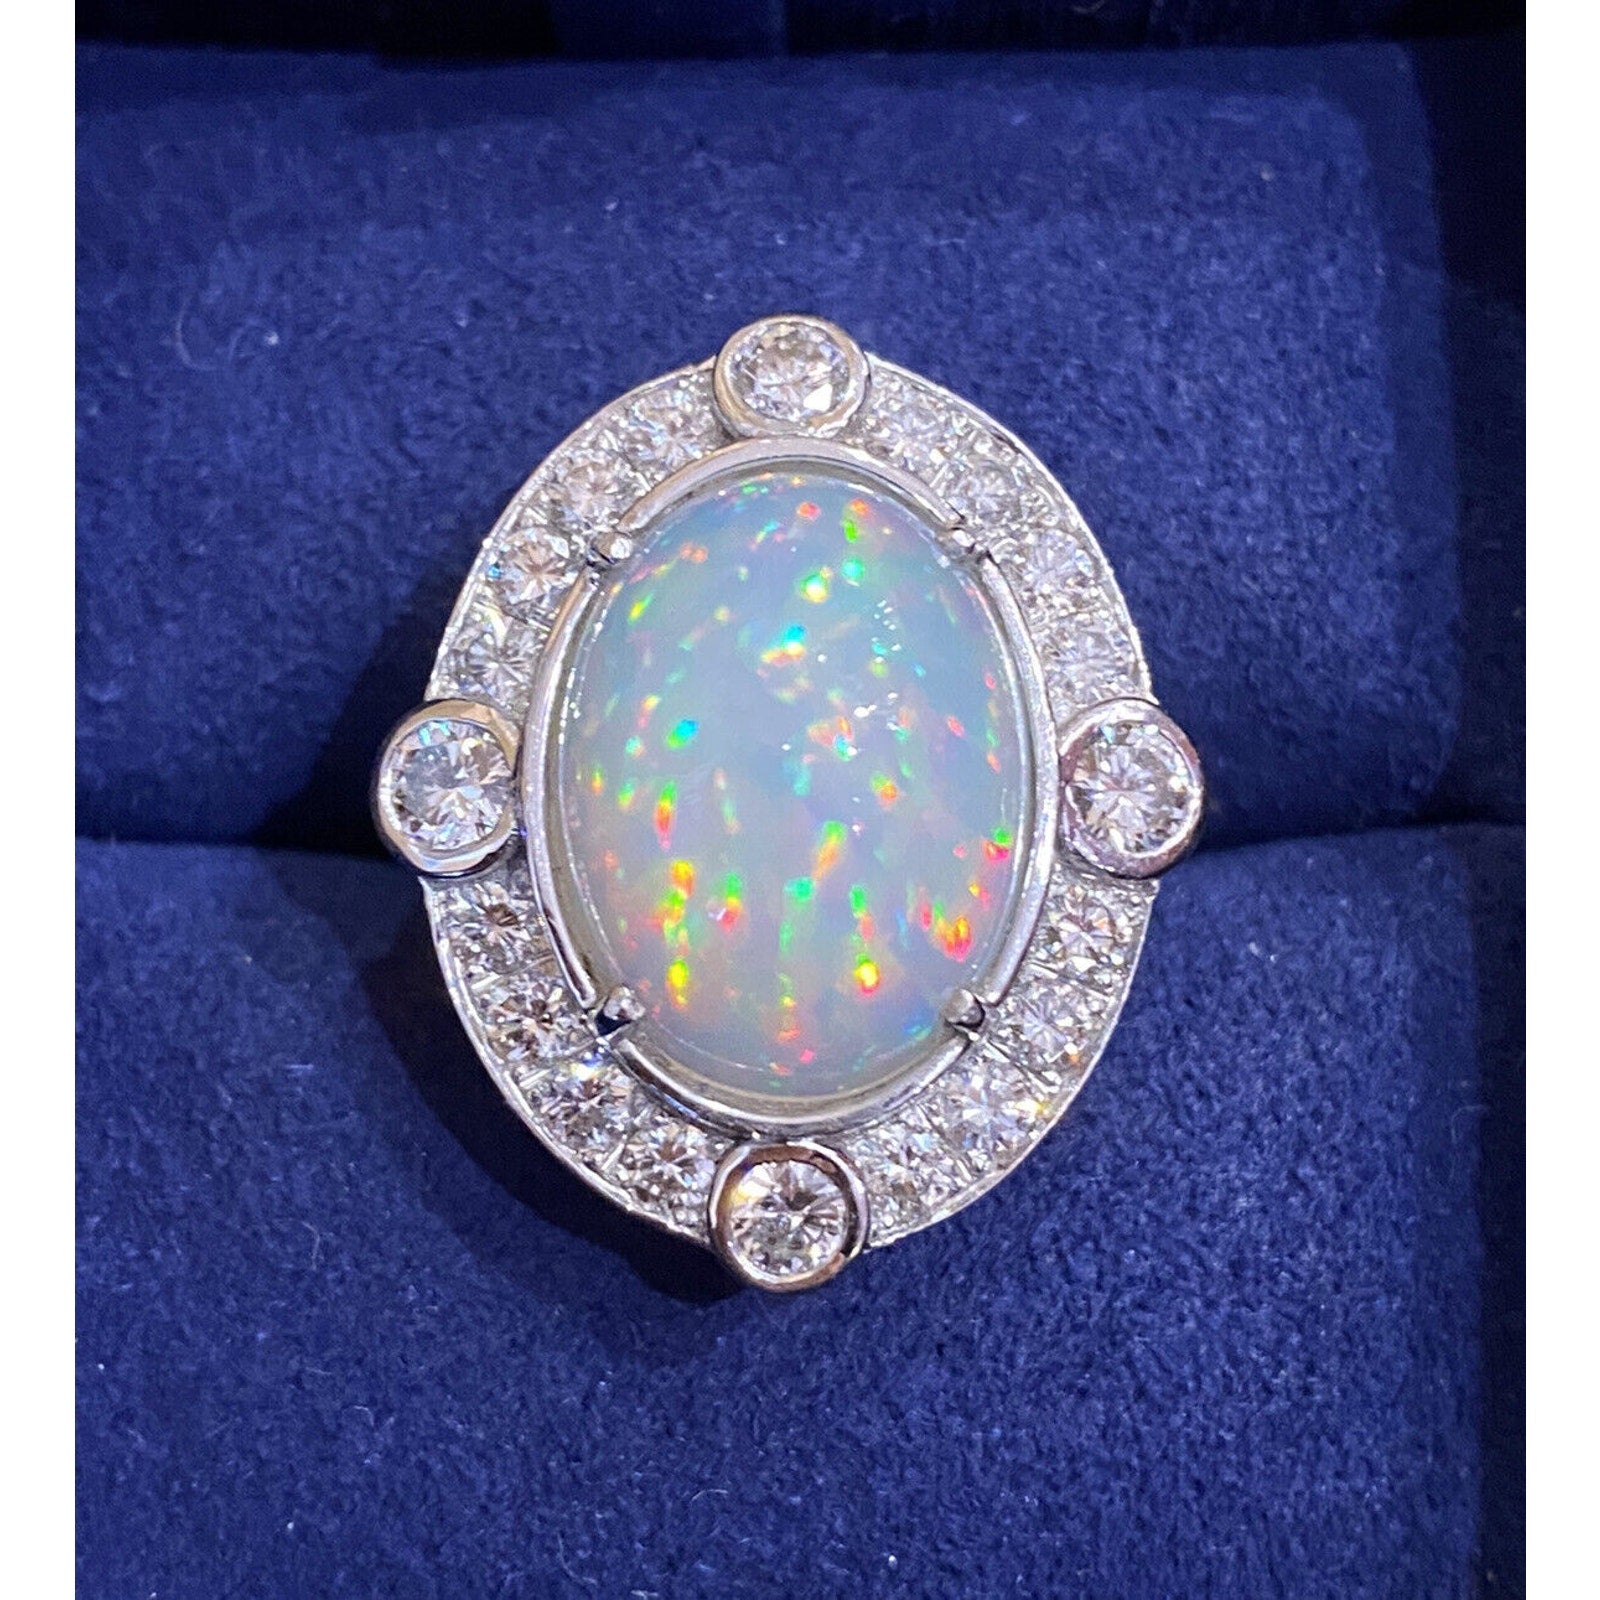 Large Ethiopian Opal Vintage Diamond Ring in 18k White Gold